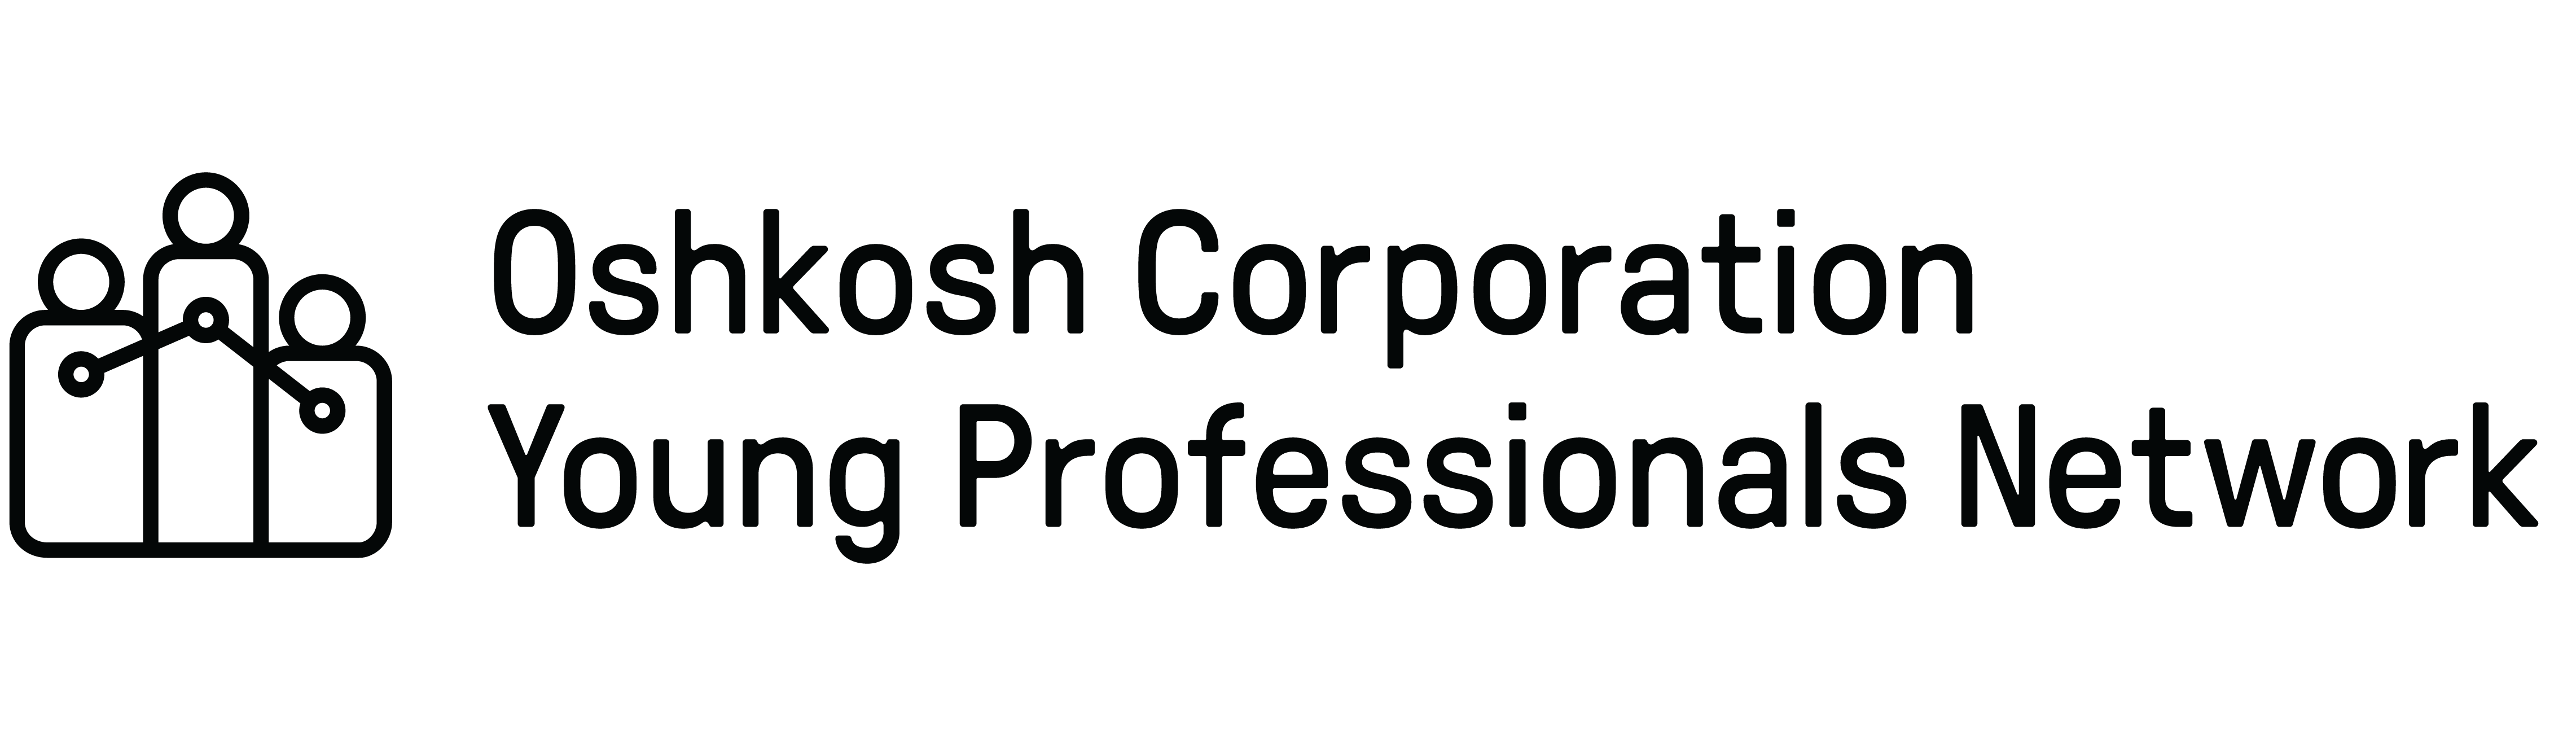 Black Oshkosh Corporation Young Professionals Network logo